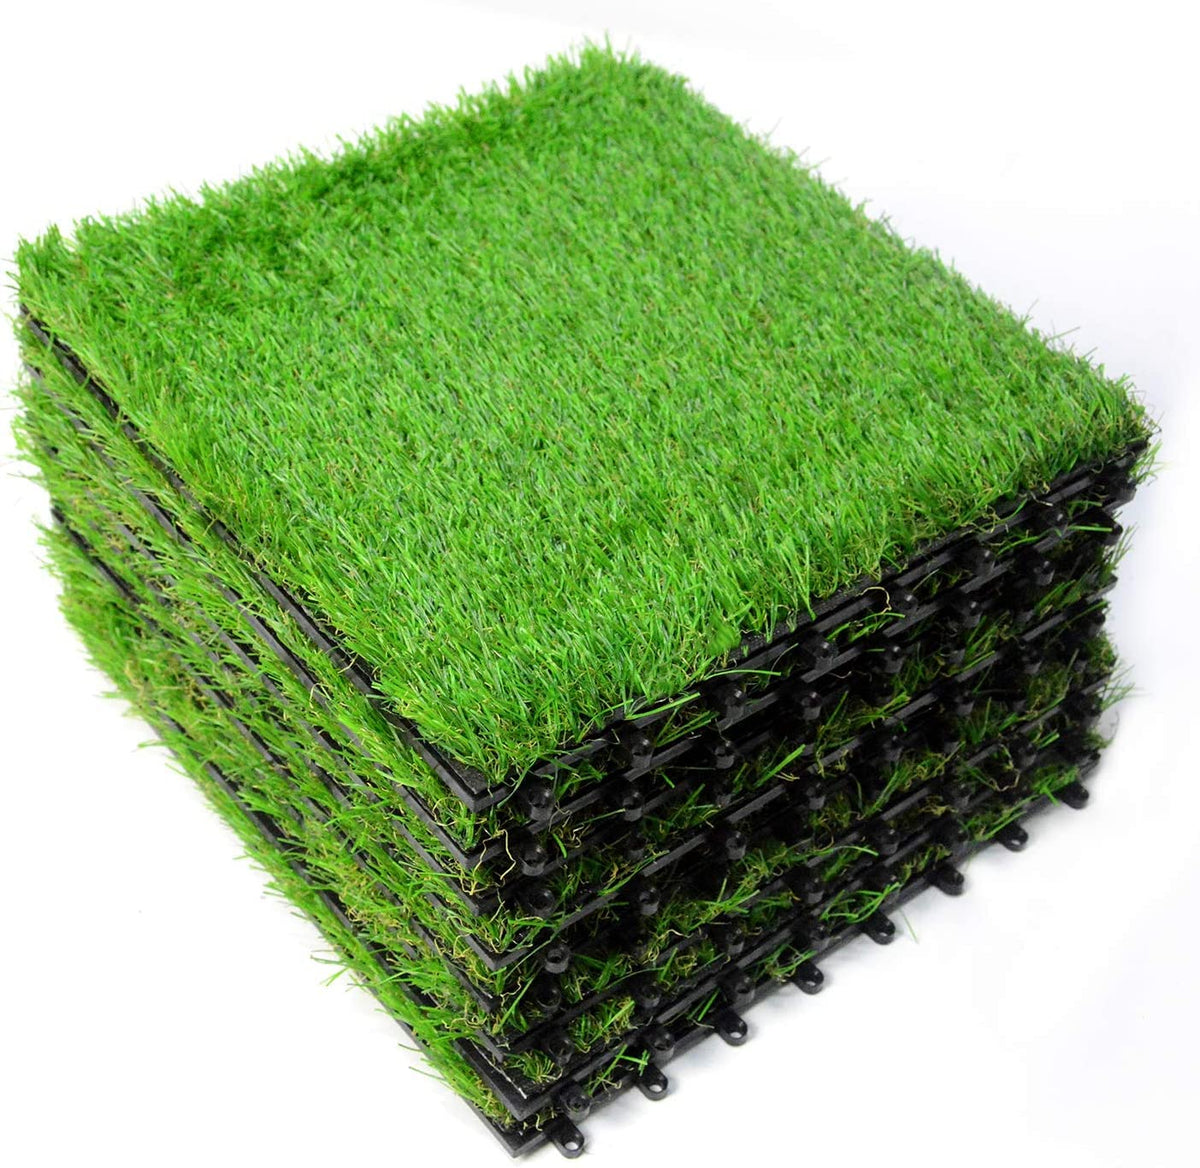 Plantex Tiles for Floor-High Density Grass Carpet Tiles/Garden Tile/Quick Flooring Solution for Indoor/Outdoor Deck Tile-Pack of 10 (1:1 Sq.Feet,APS-1213)